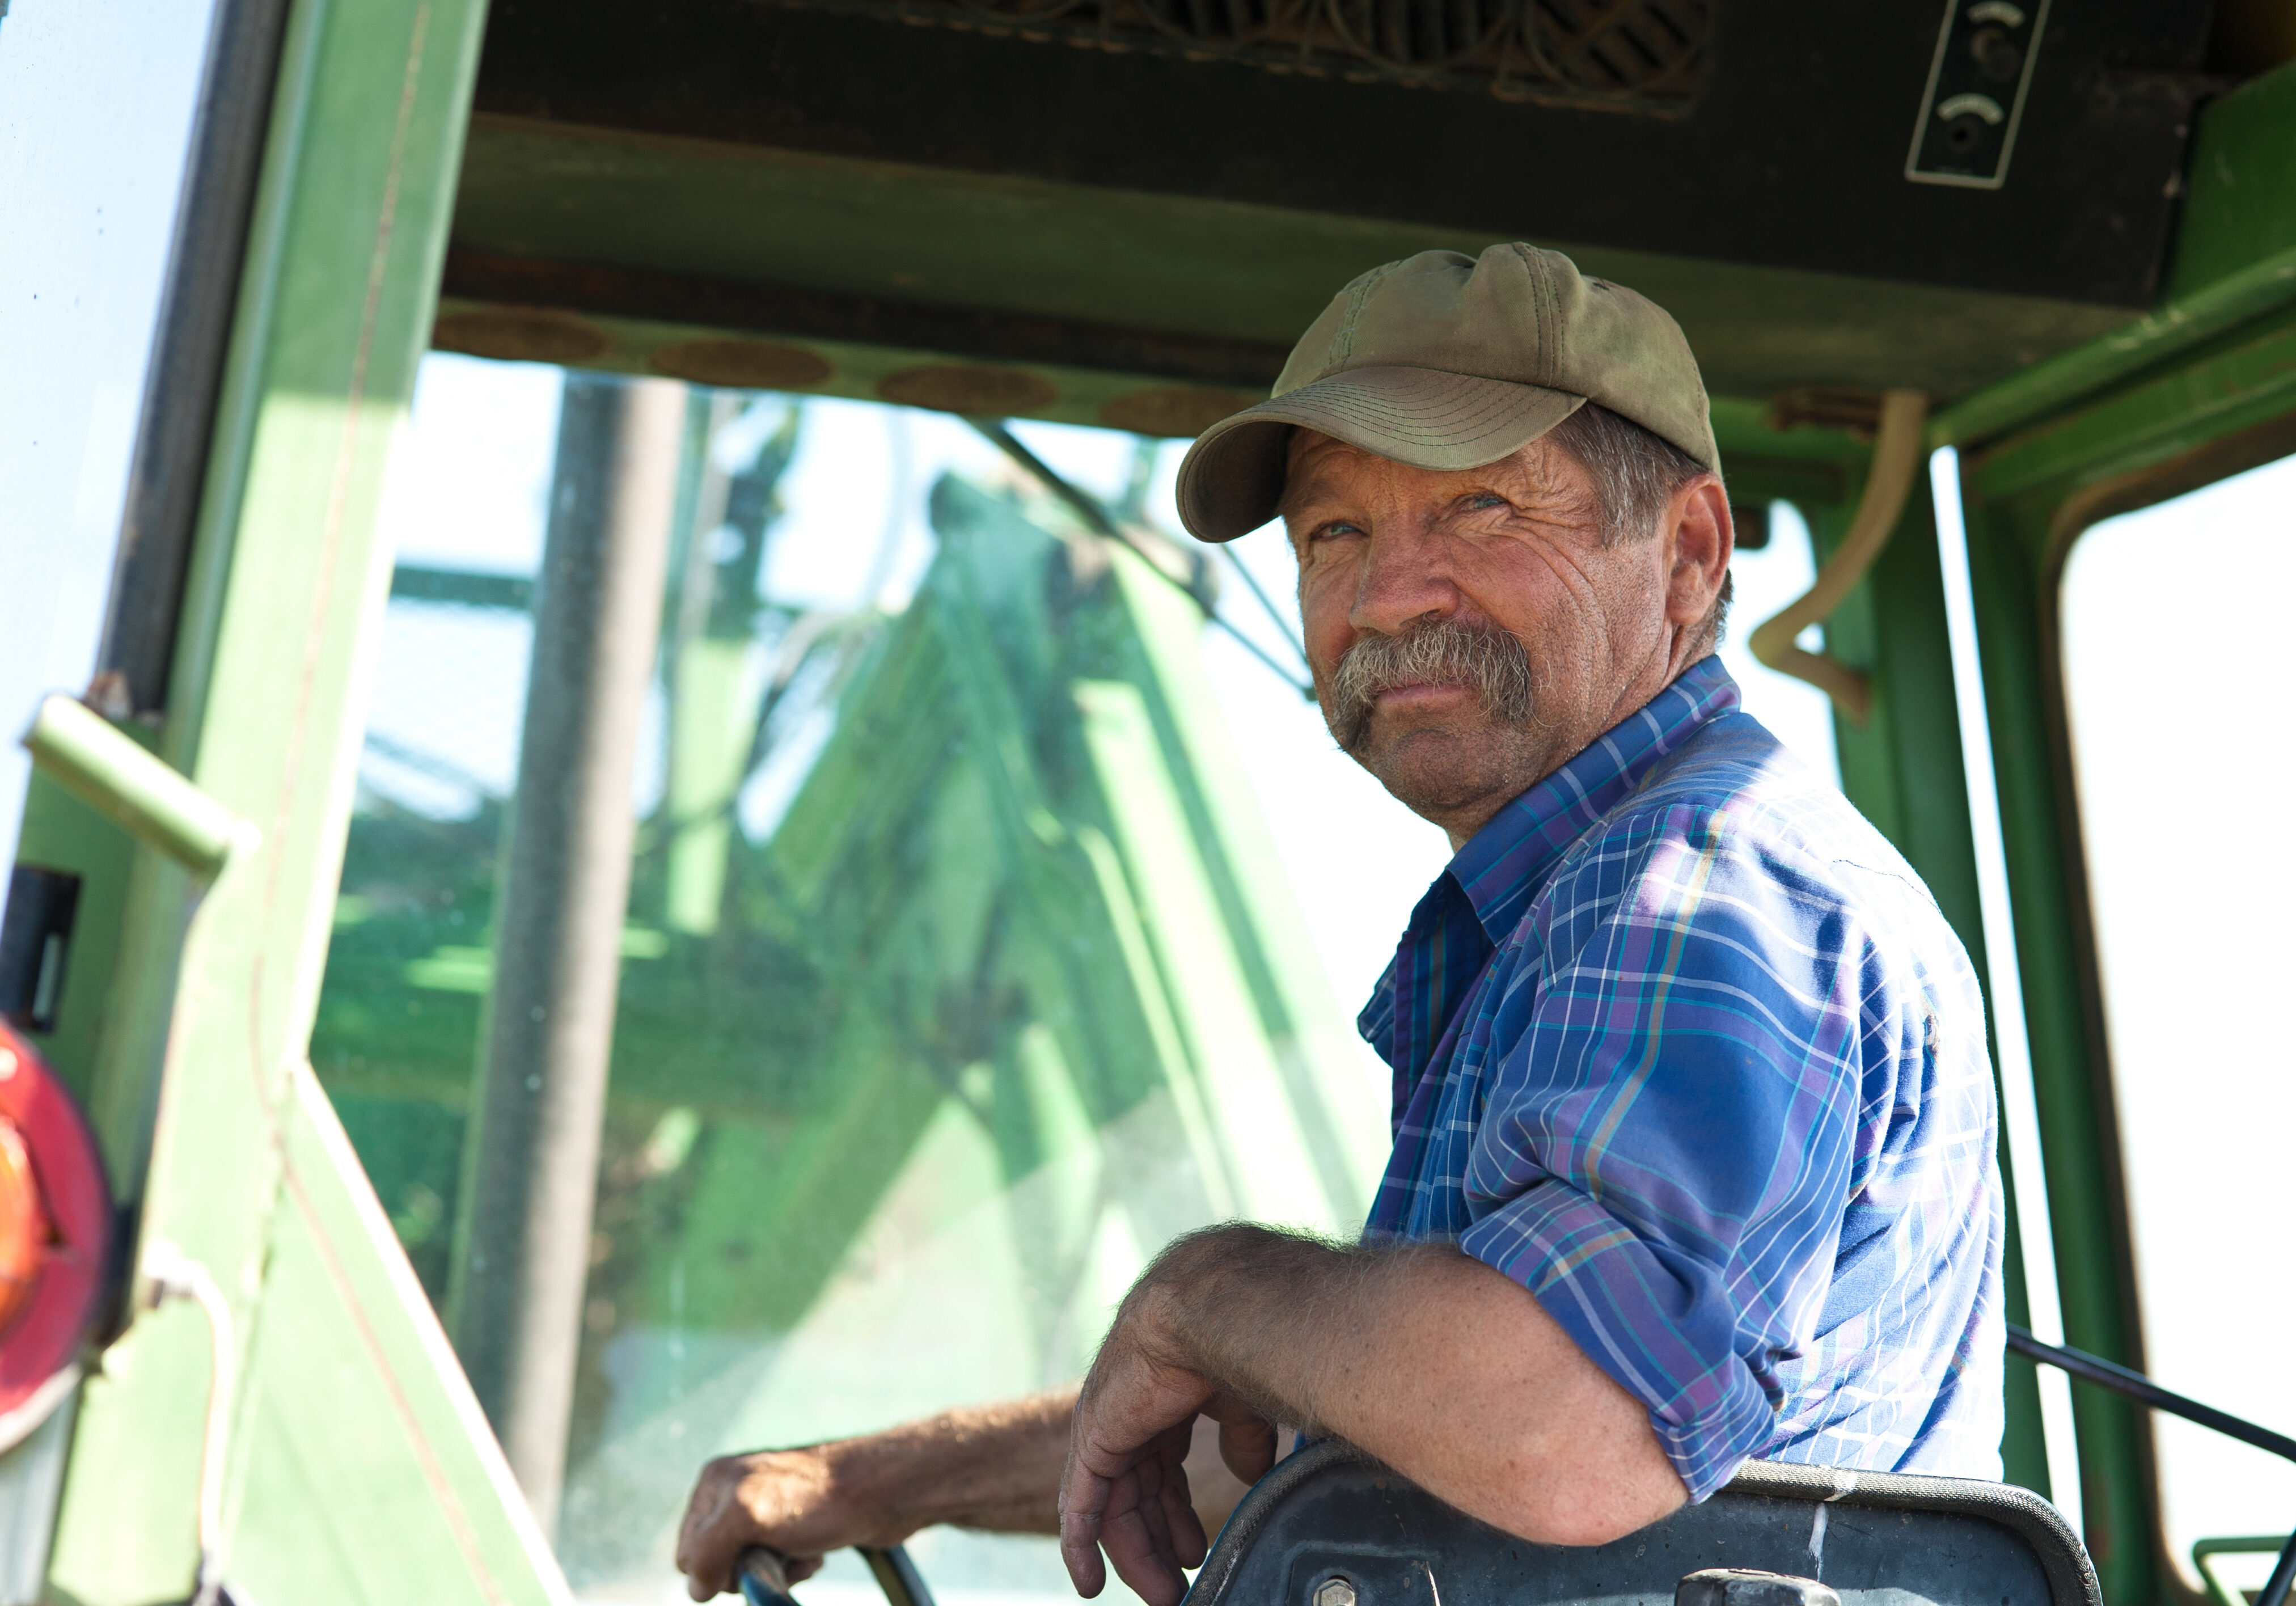 A candid portrait of a senior male farmer sitting in a tractor.